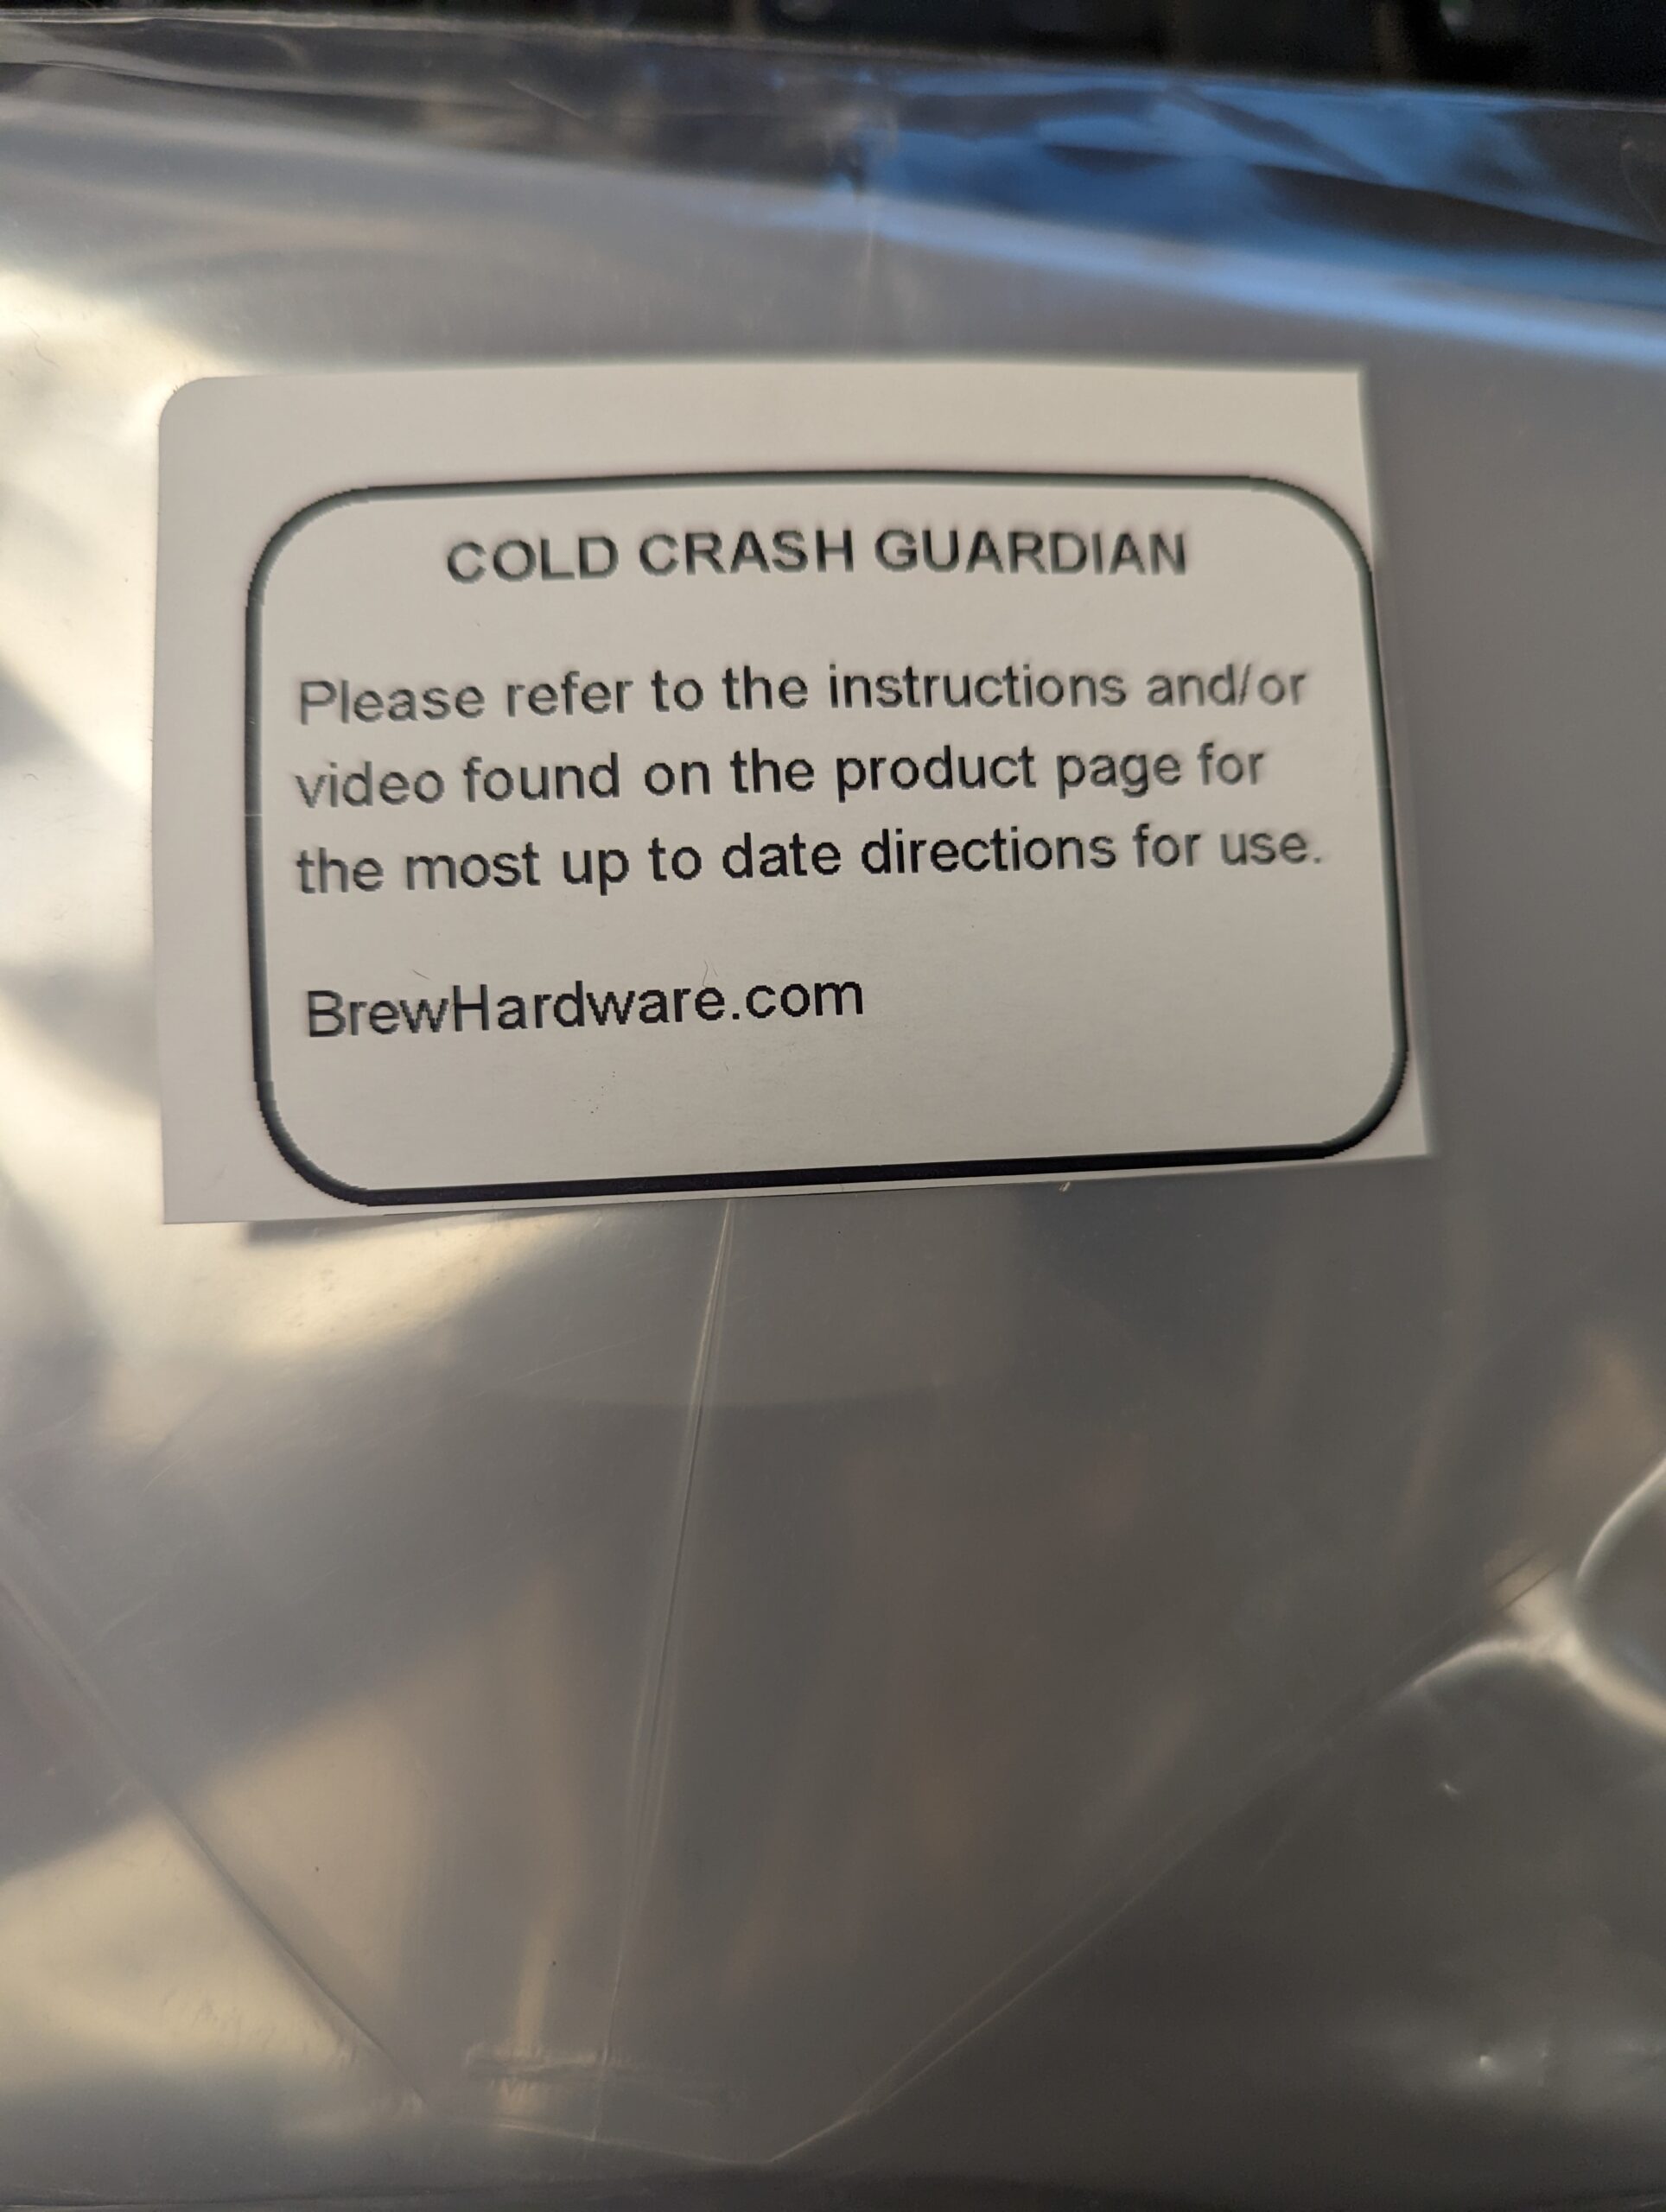 Cold Crash Guardian by Brewhardware.com